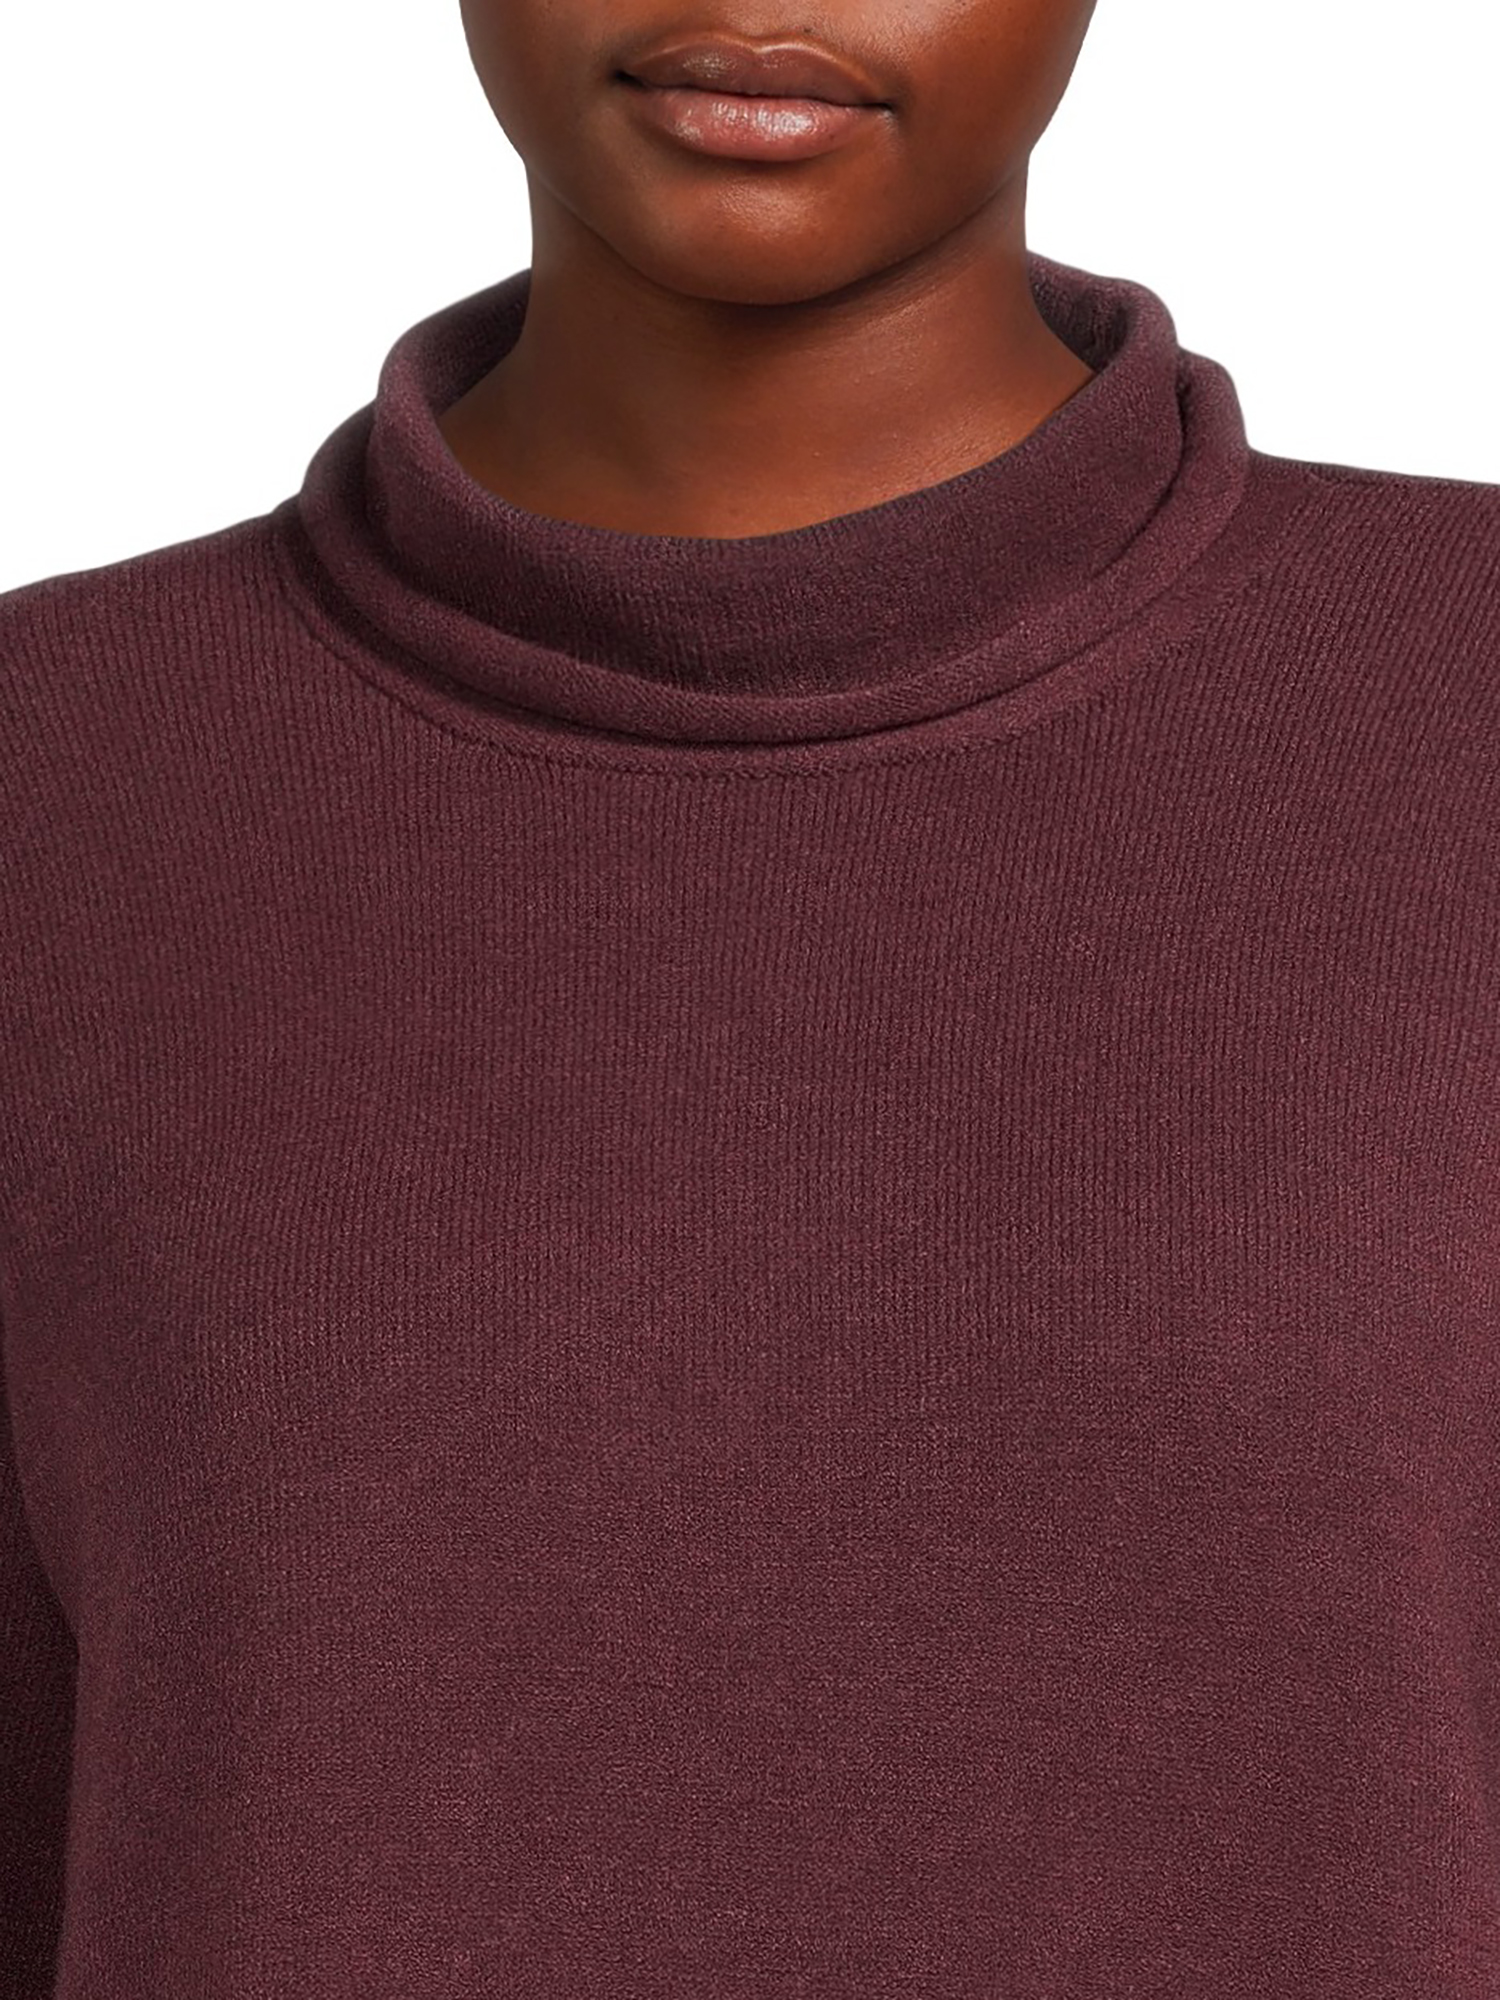 Terra & Sky Women's Plus Size Turtleneck Tunic Length Sweater Dress - image 4 of 5